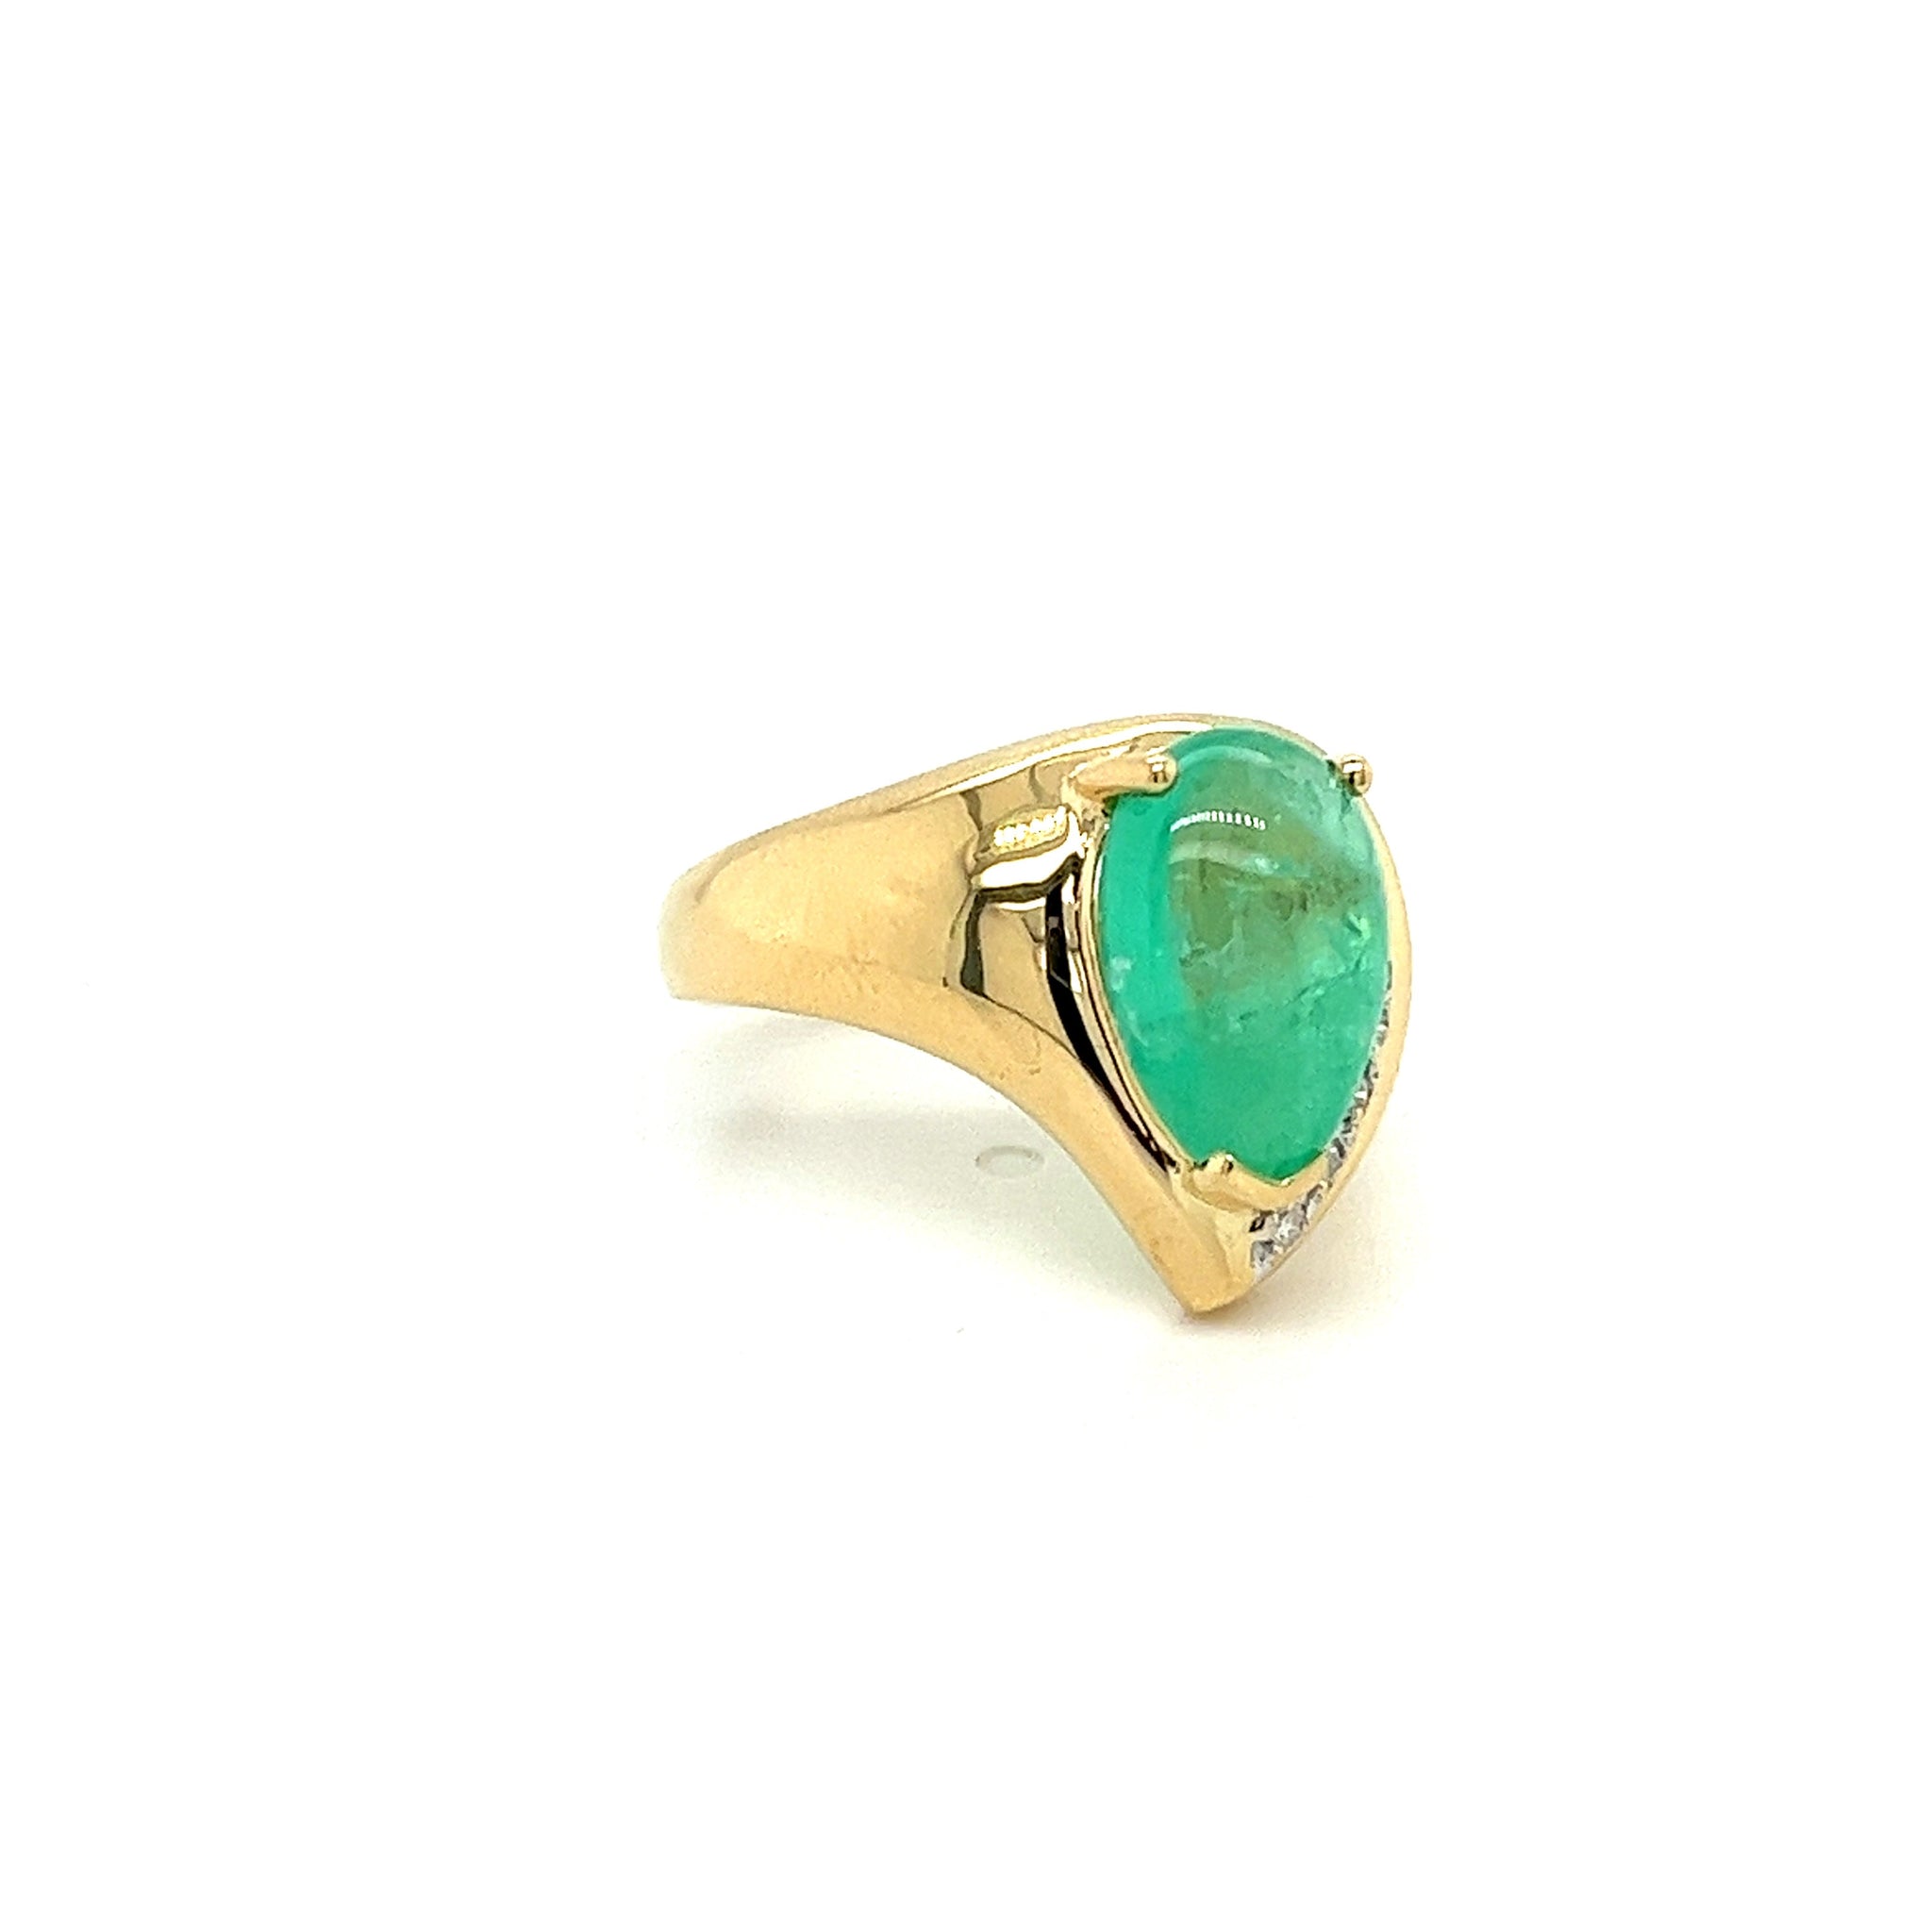 7.81 Carat Pear Shaped Cabochon Cut Natural Emerald & Diamond Ring in 18K Yellow Gold